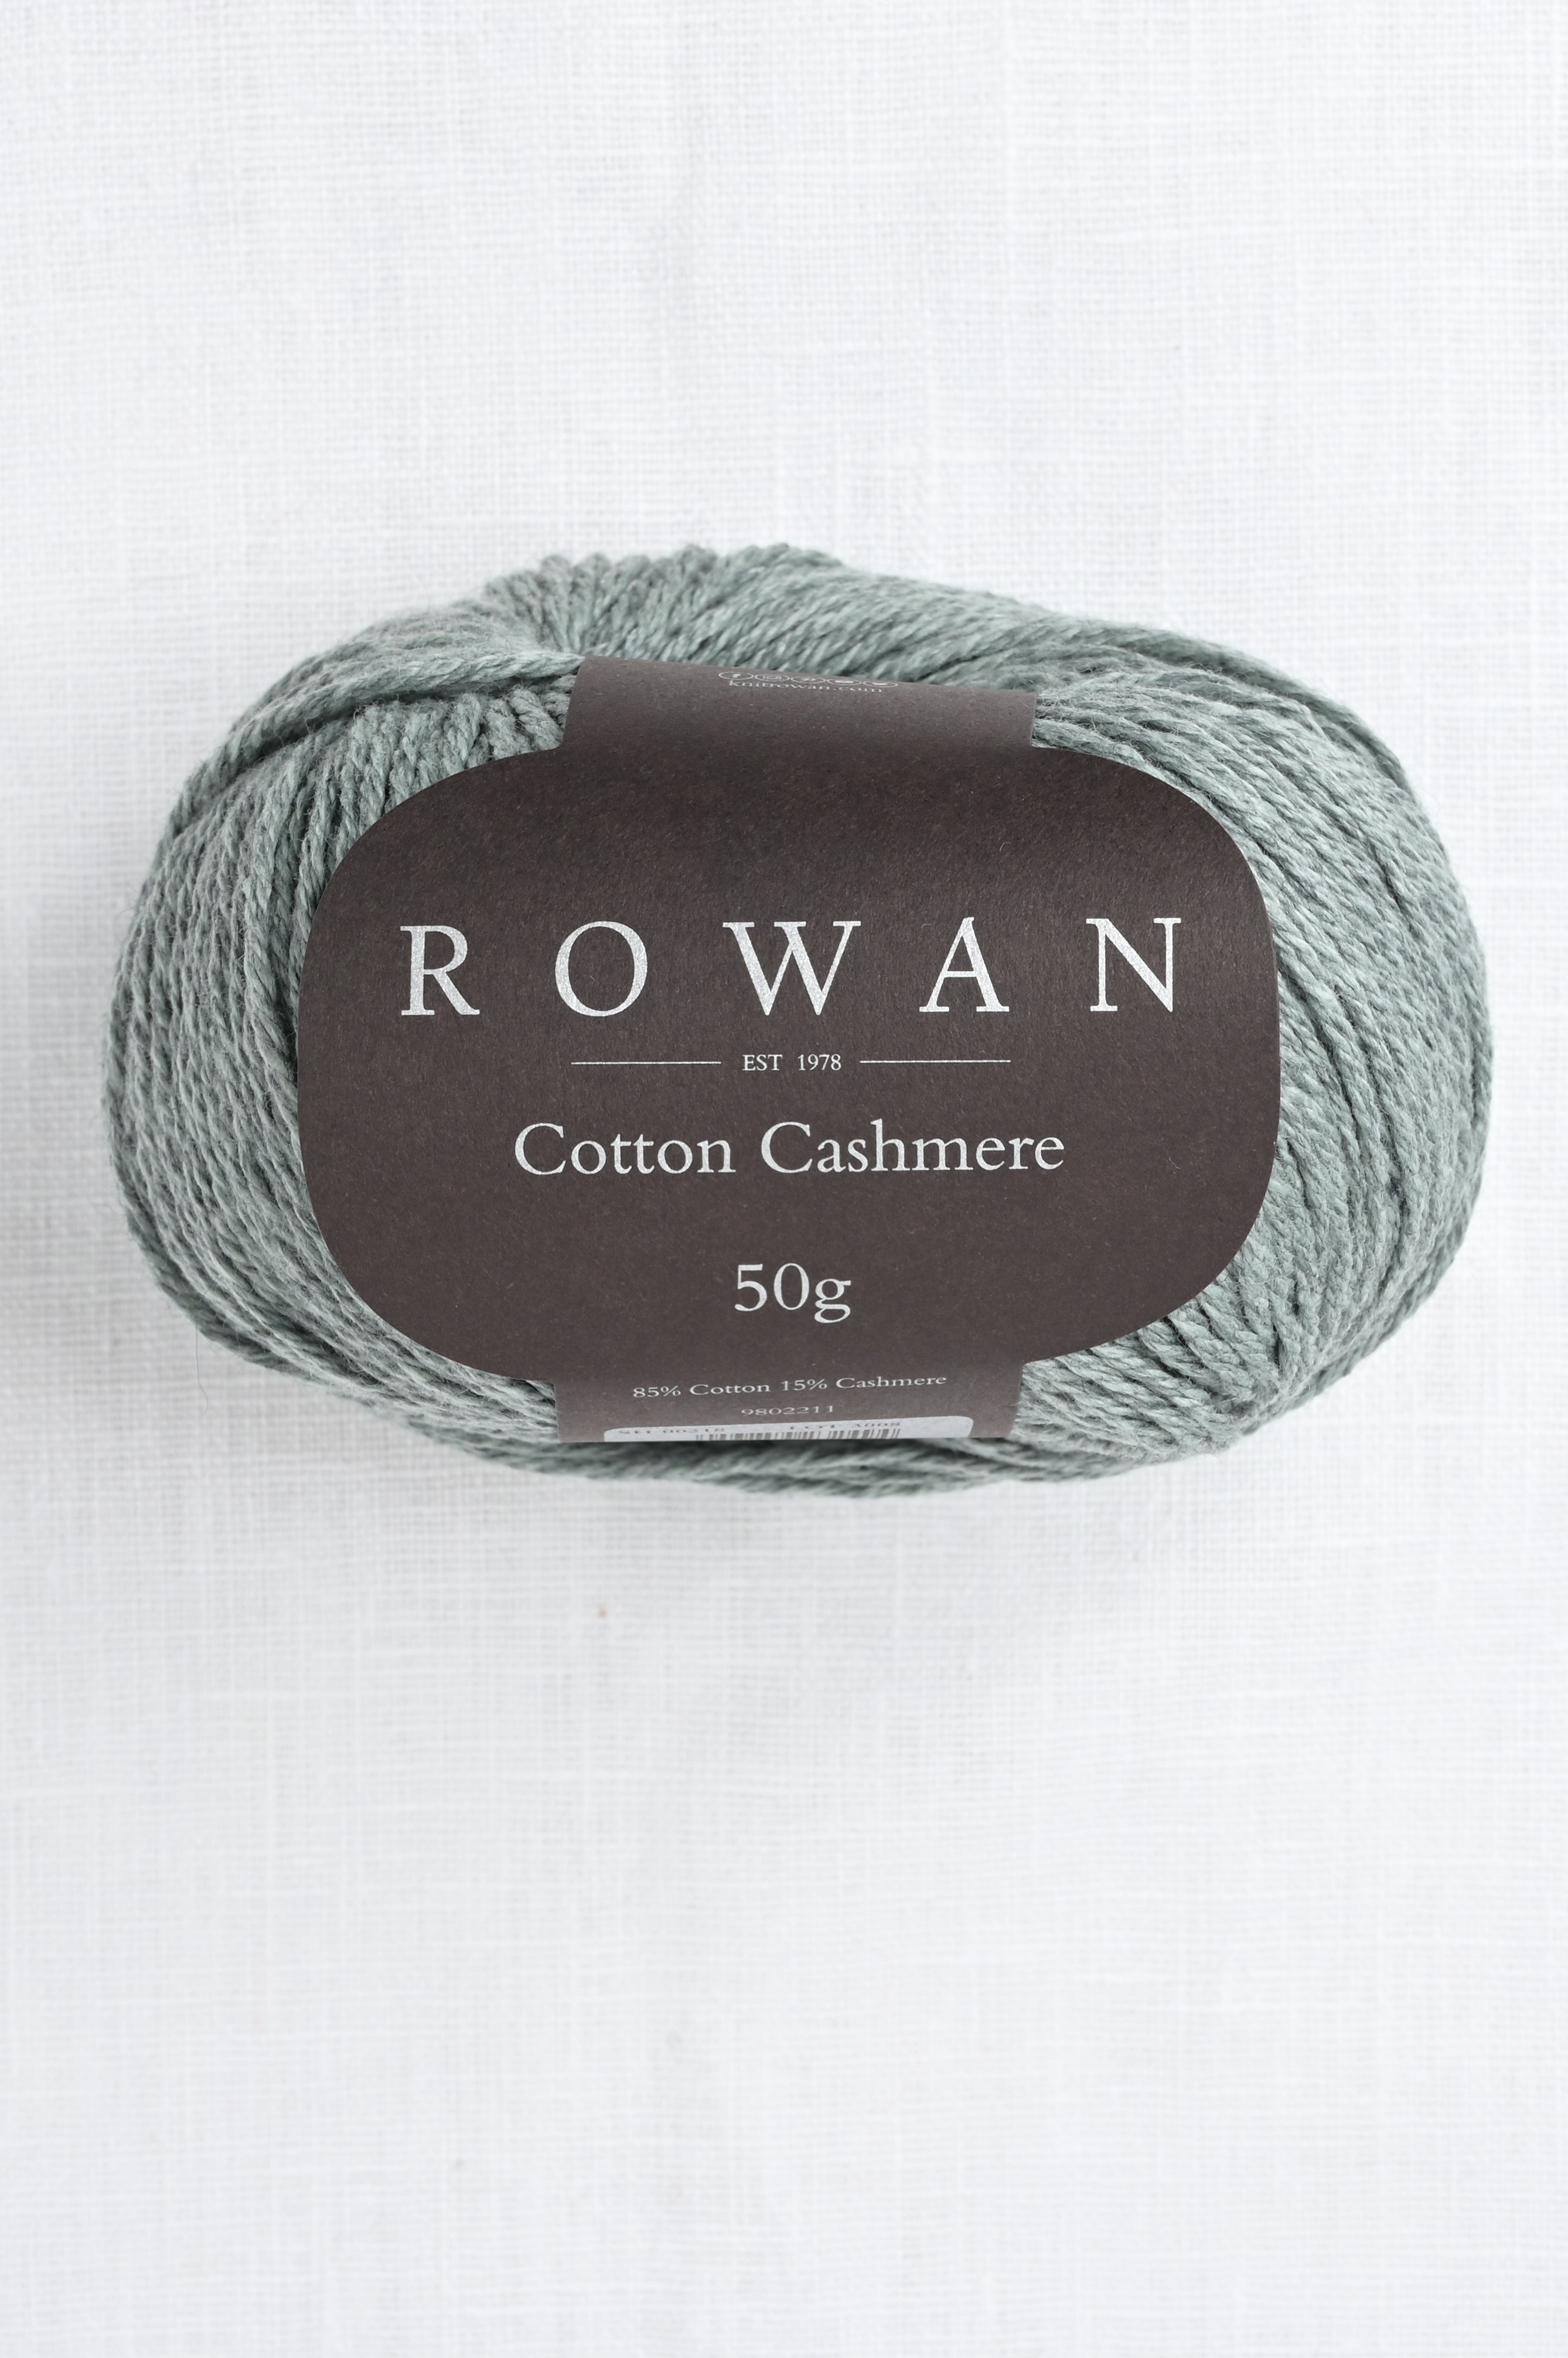 Rowan Cotton Cashmere - Four Purls Yarn Shop